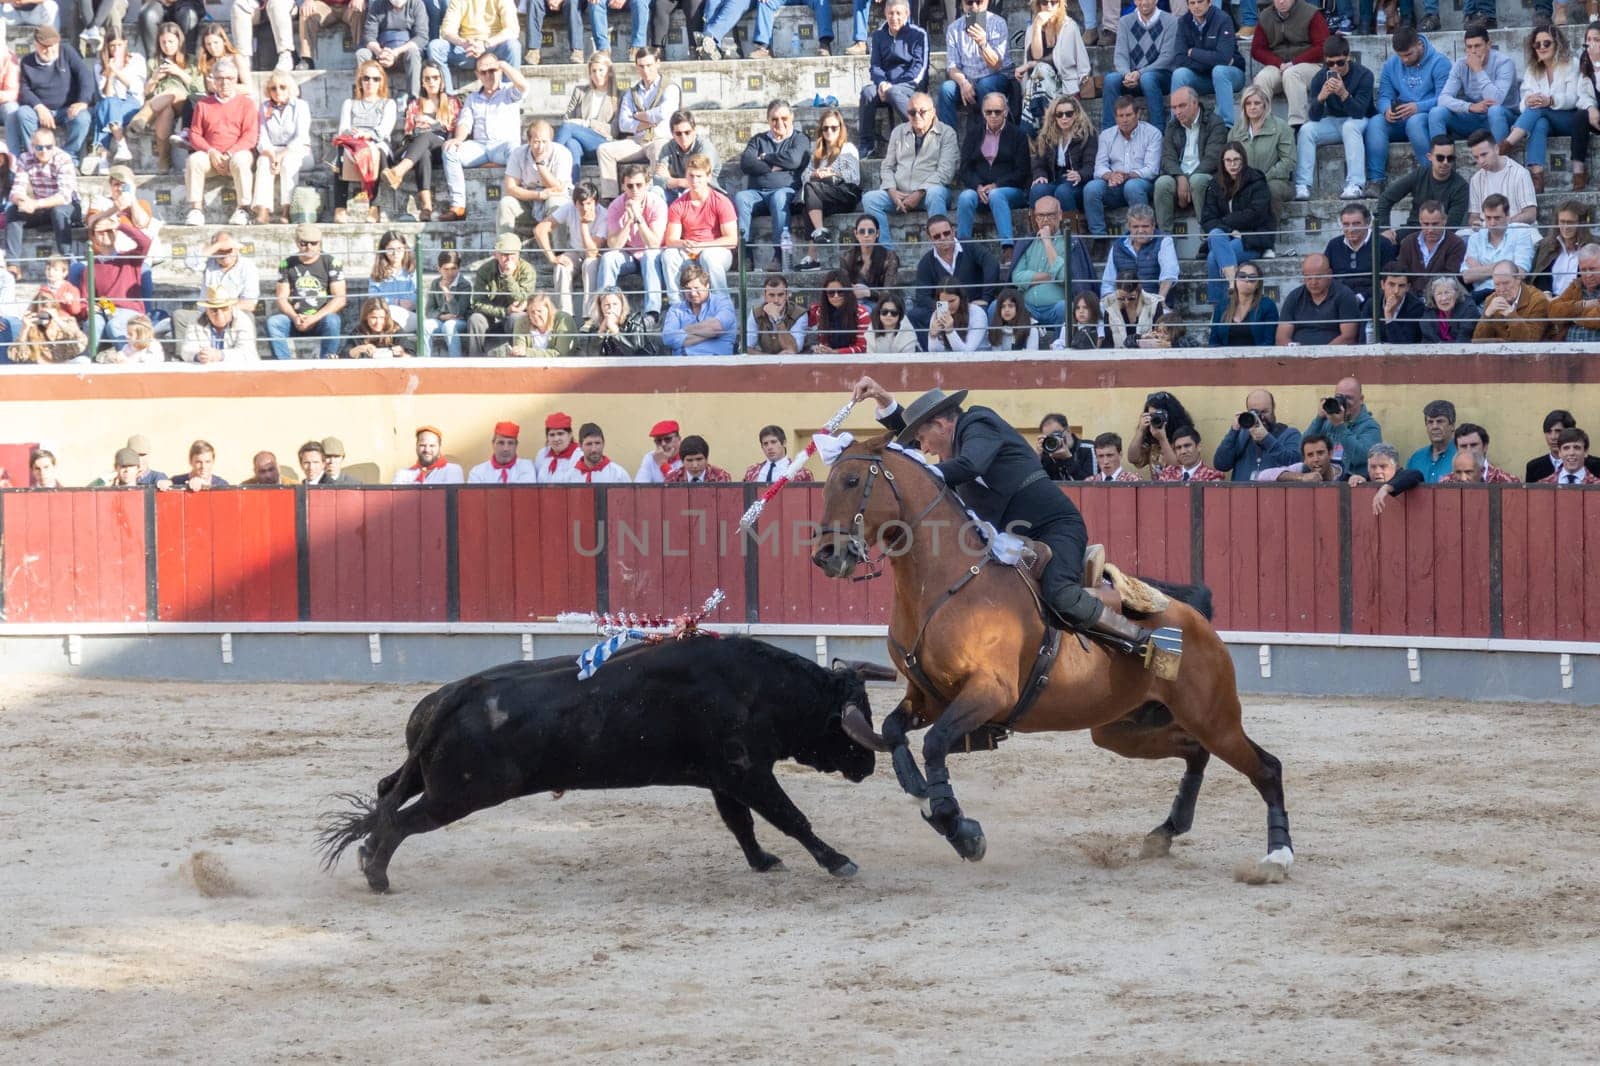 March 26, 2023 Lisbon, Portugal: Tourada - cavaleiro on horseback against the bull on the arena in amphitheater. Mid shot